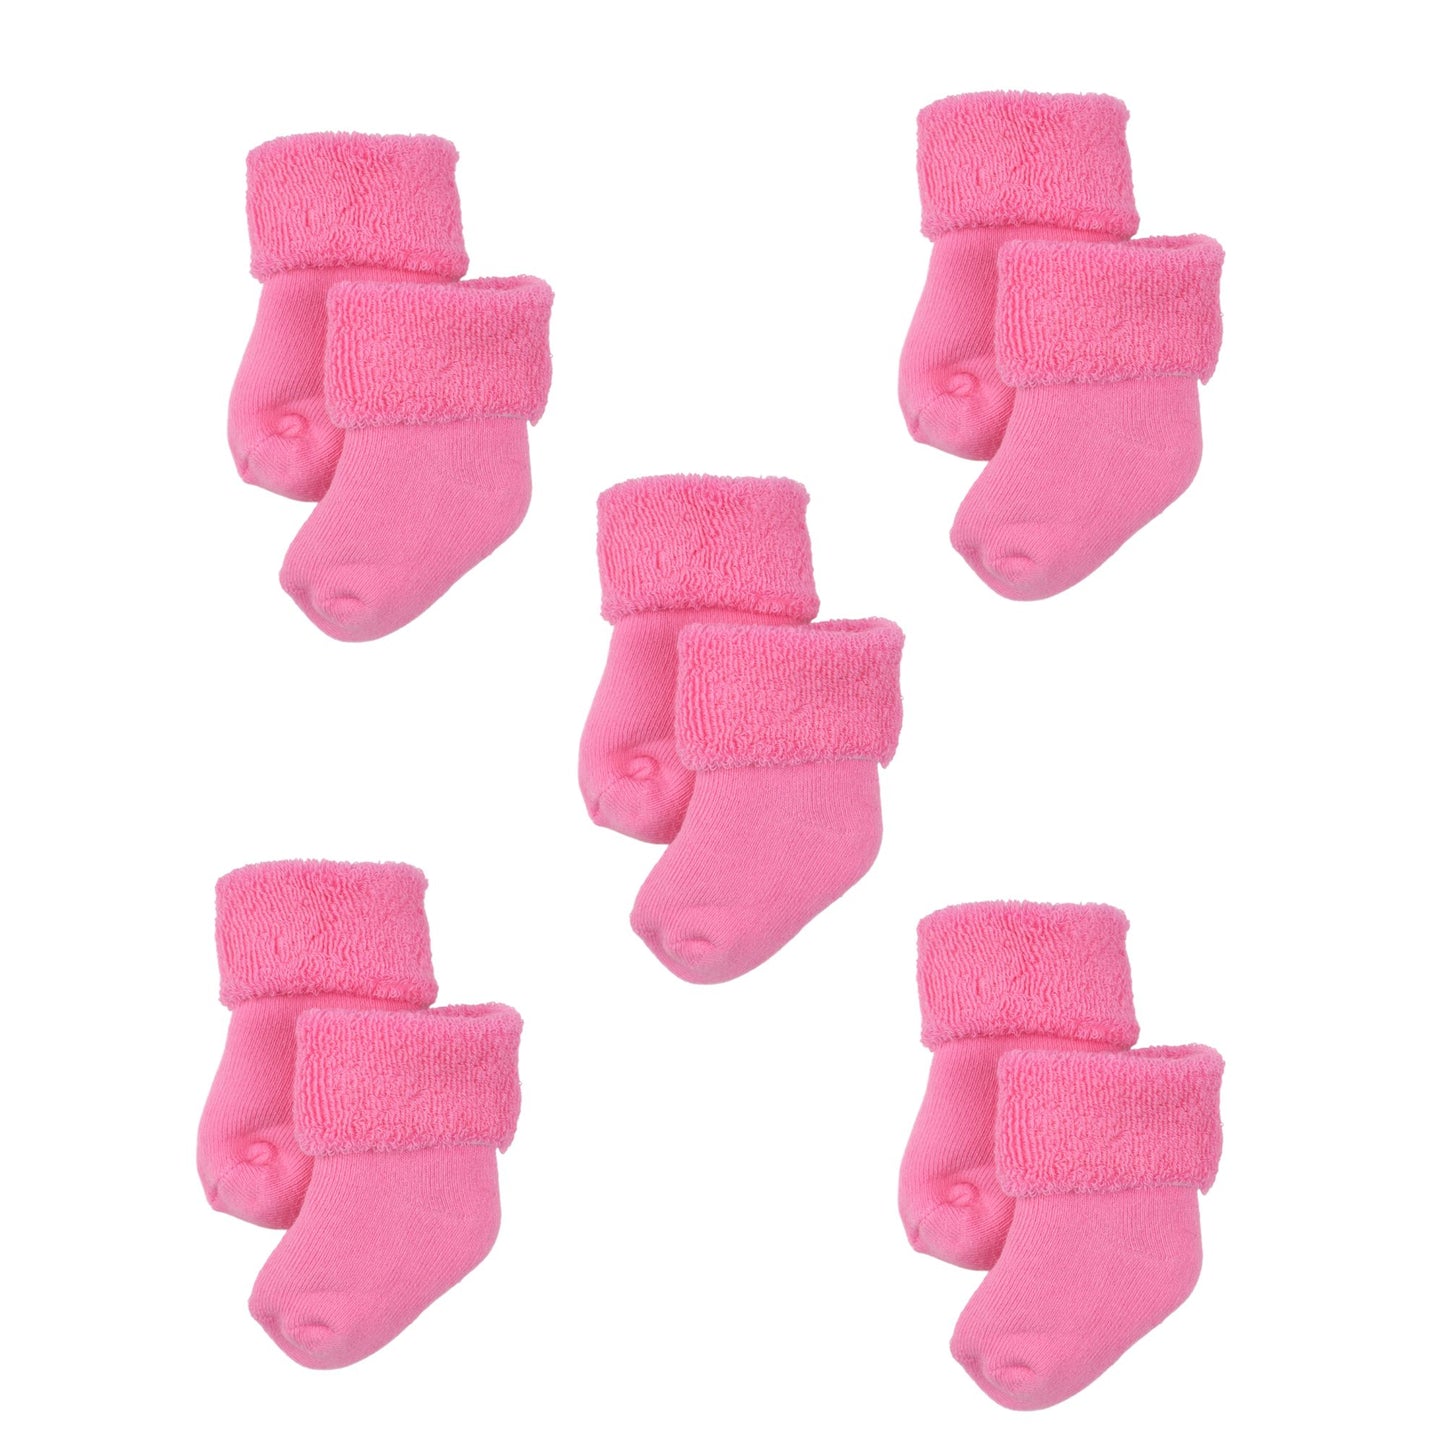 baby blossom infant socks in medium pink